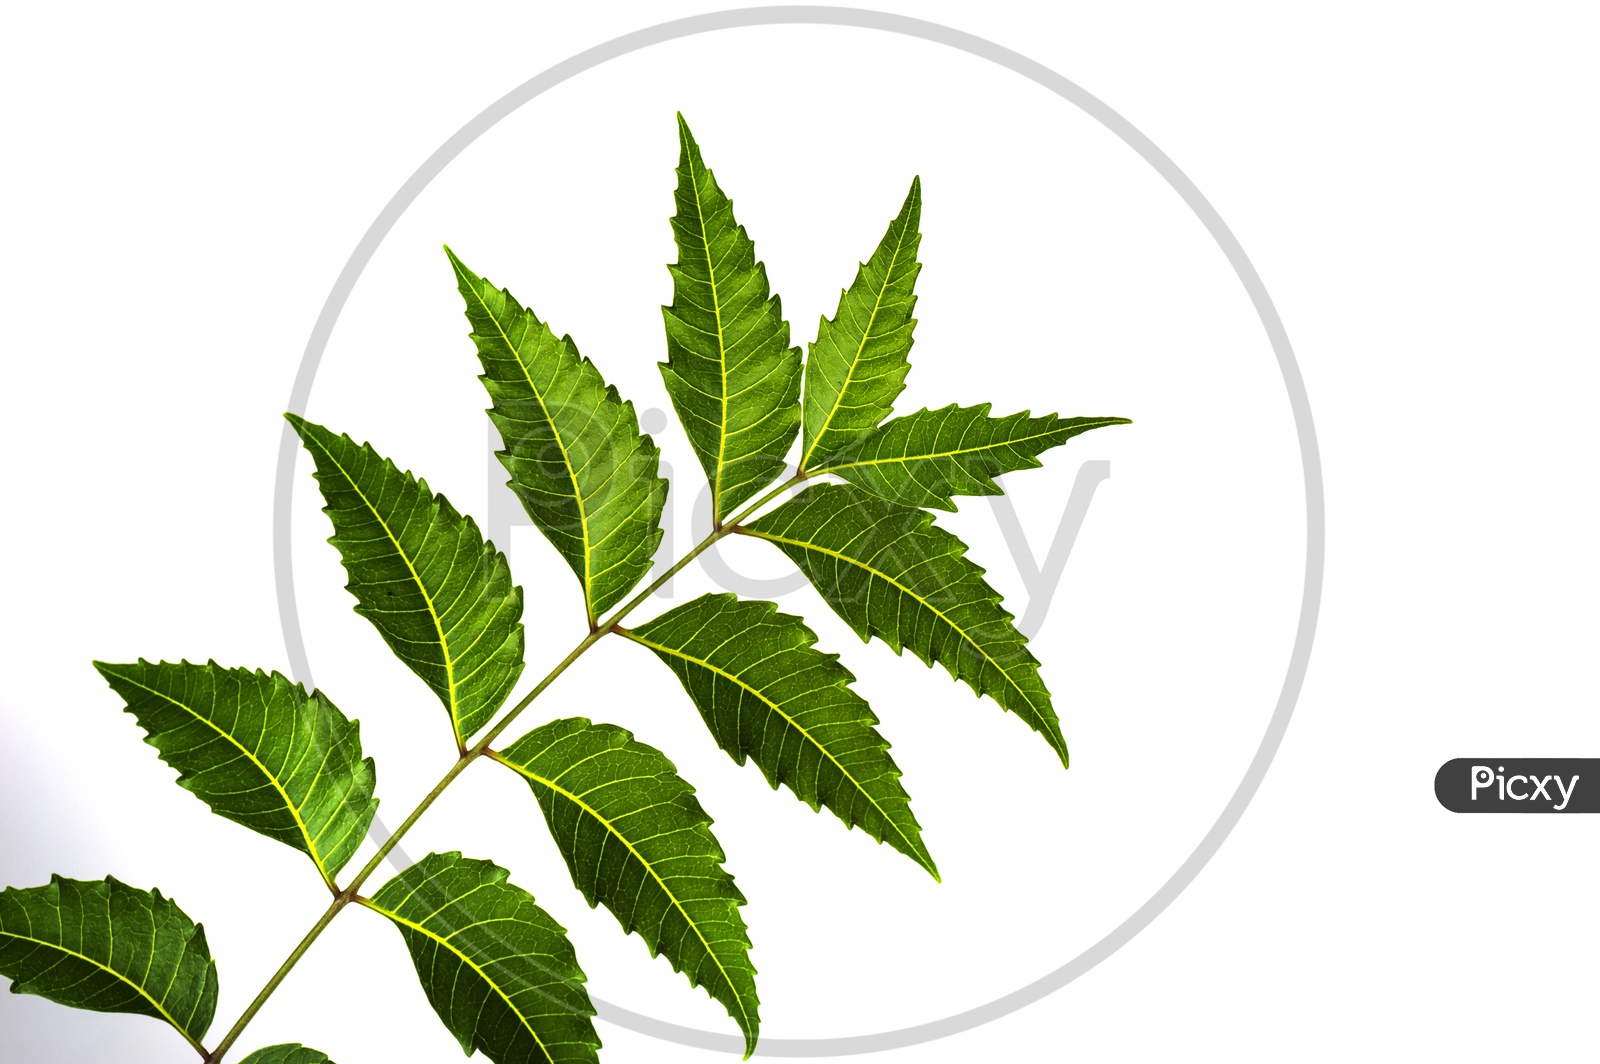 Medicinal neem leaf on white background. Azadirachta indica.